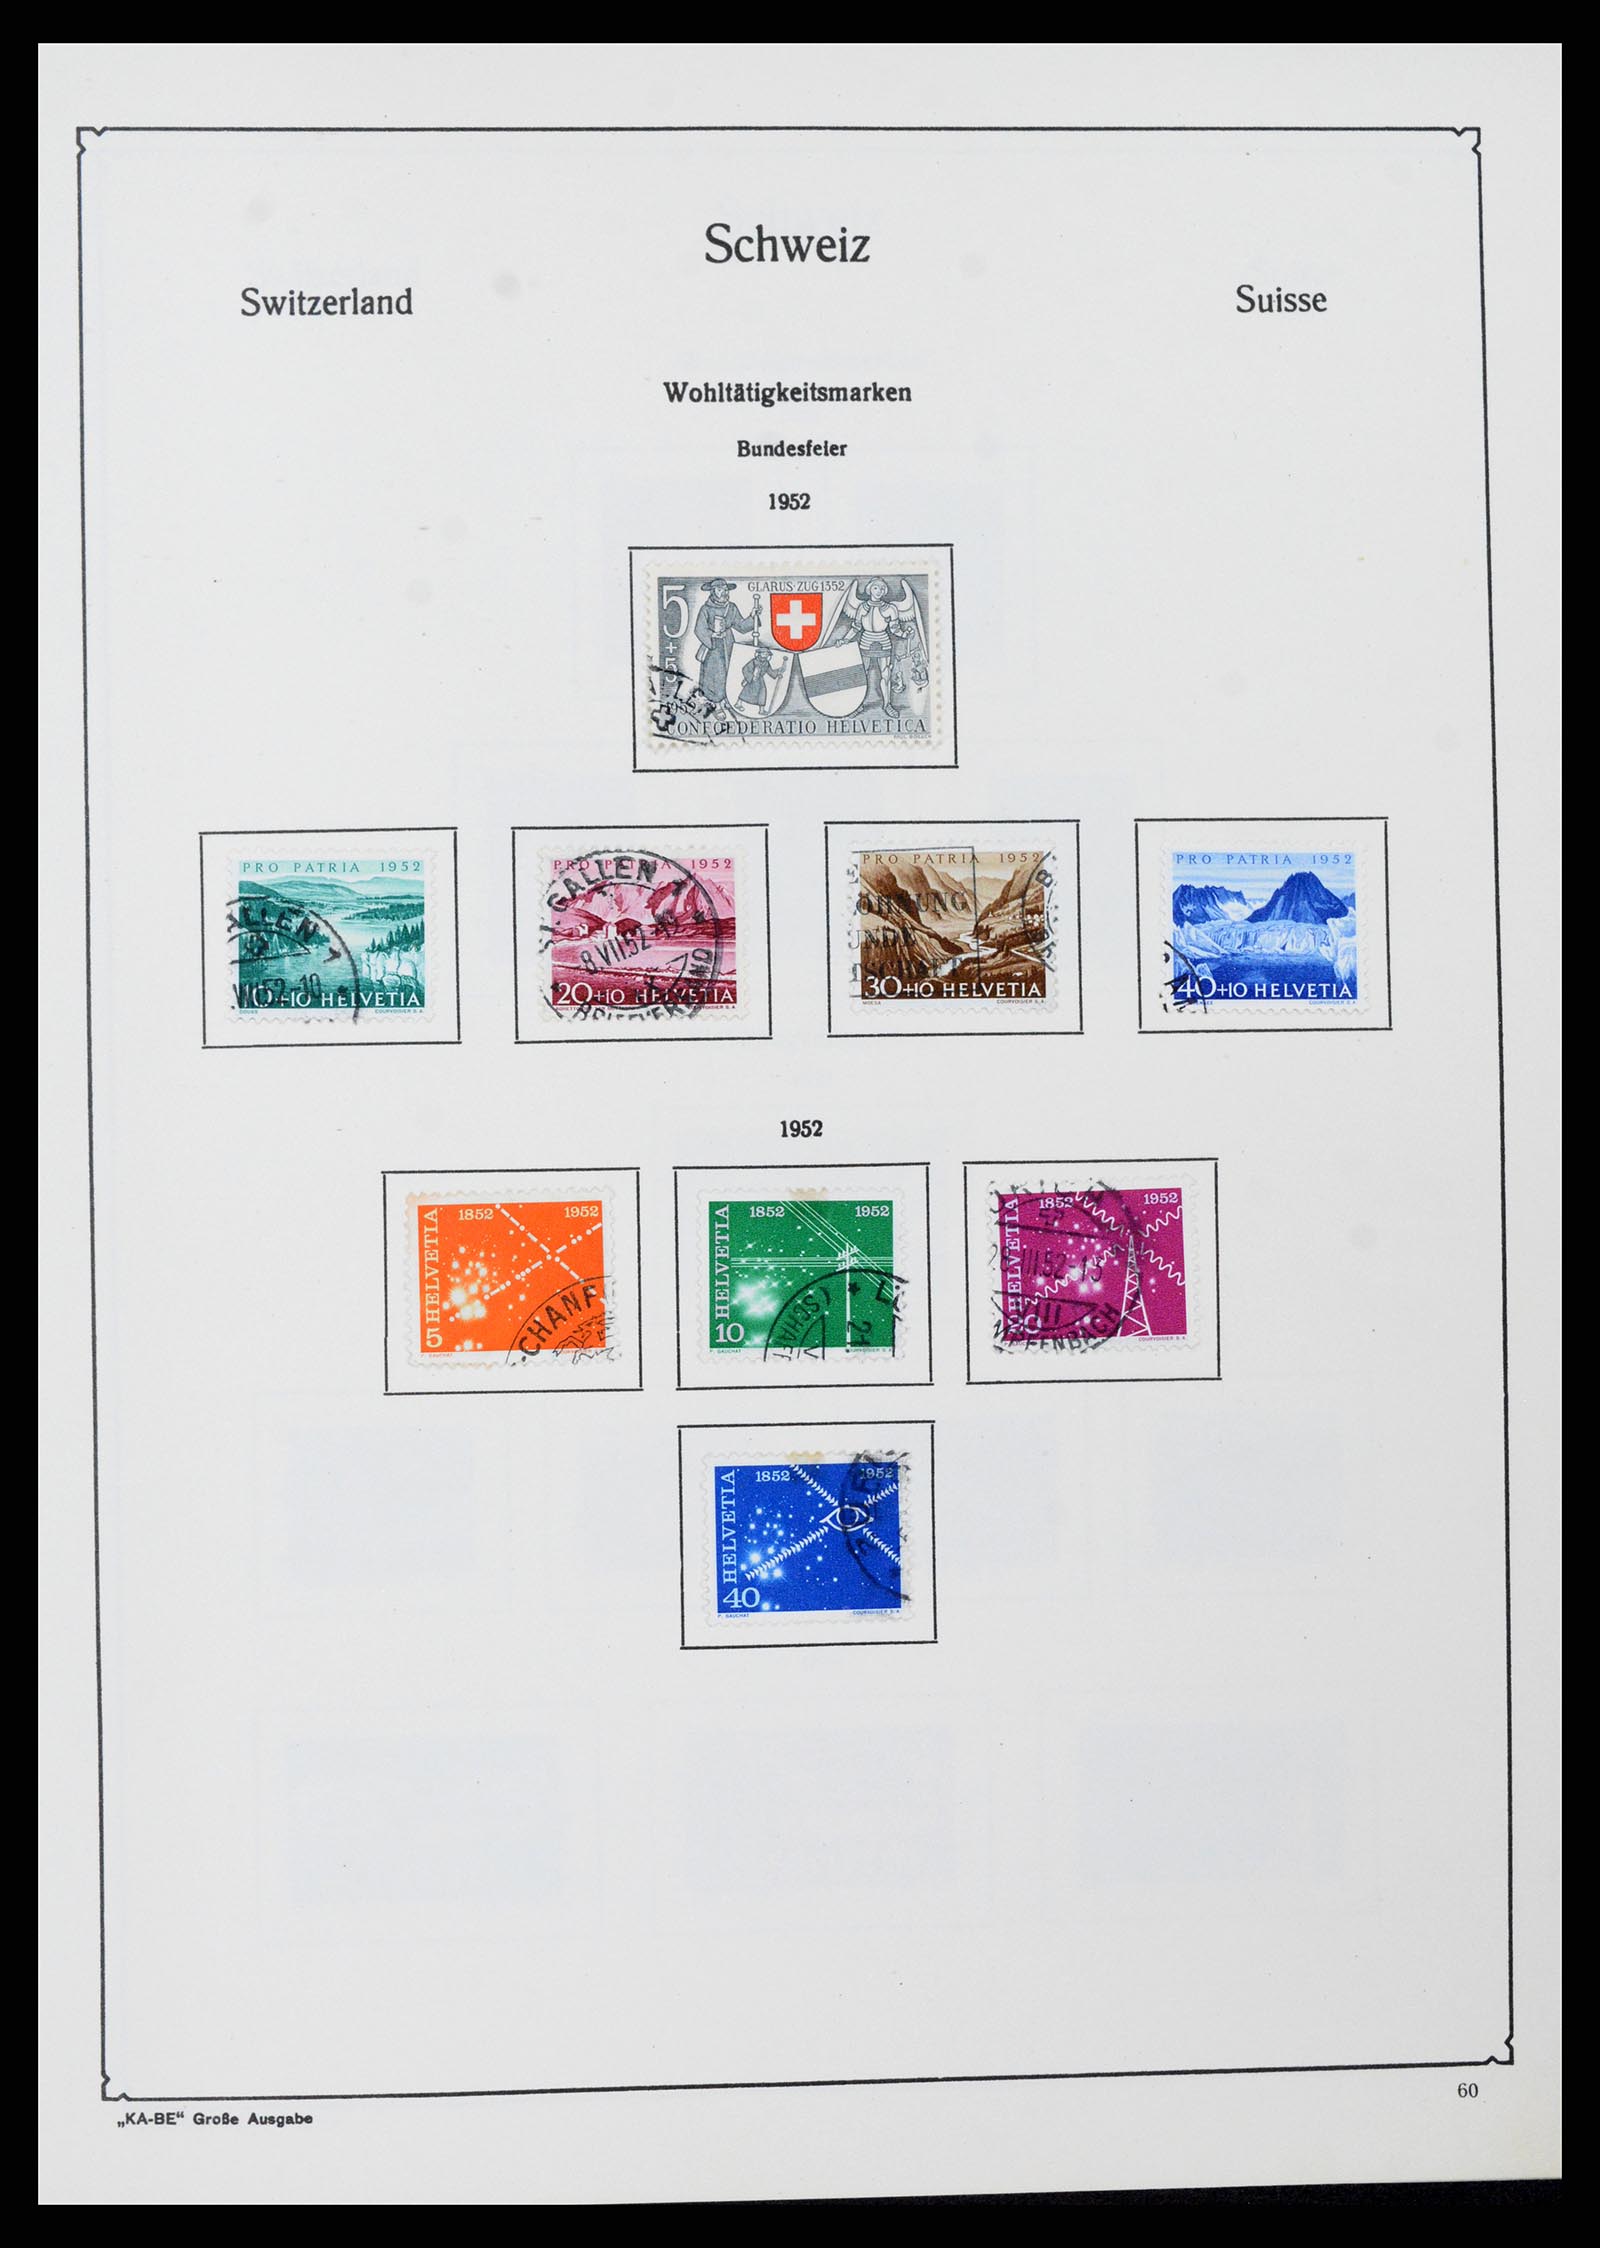 37588 056 - Stamp collection 37588 Switzerland 1854-1974.